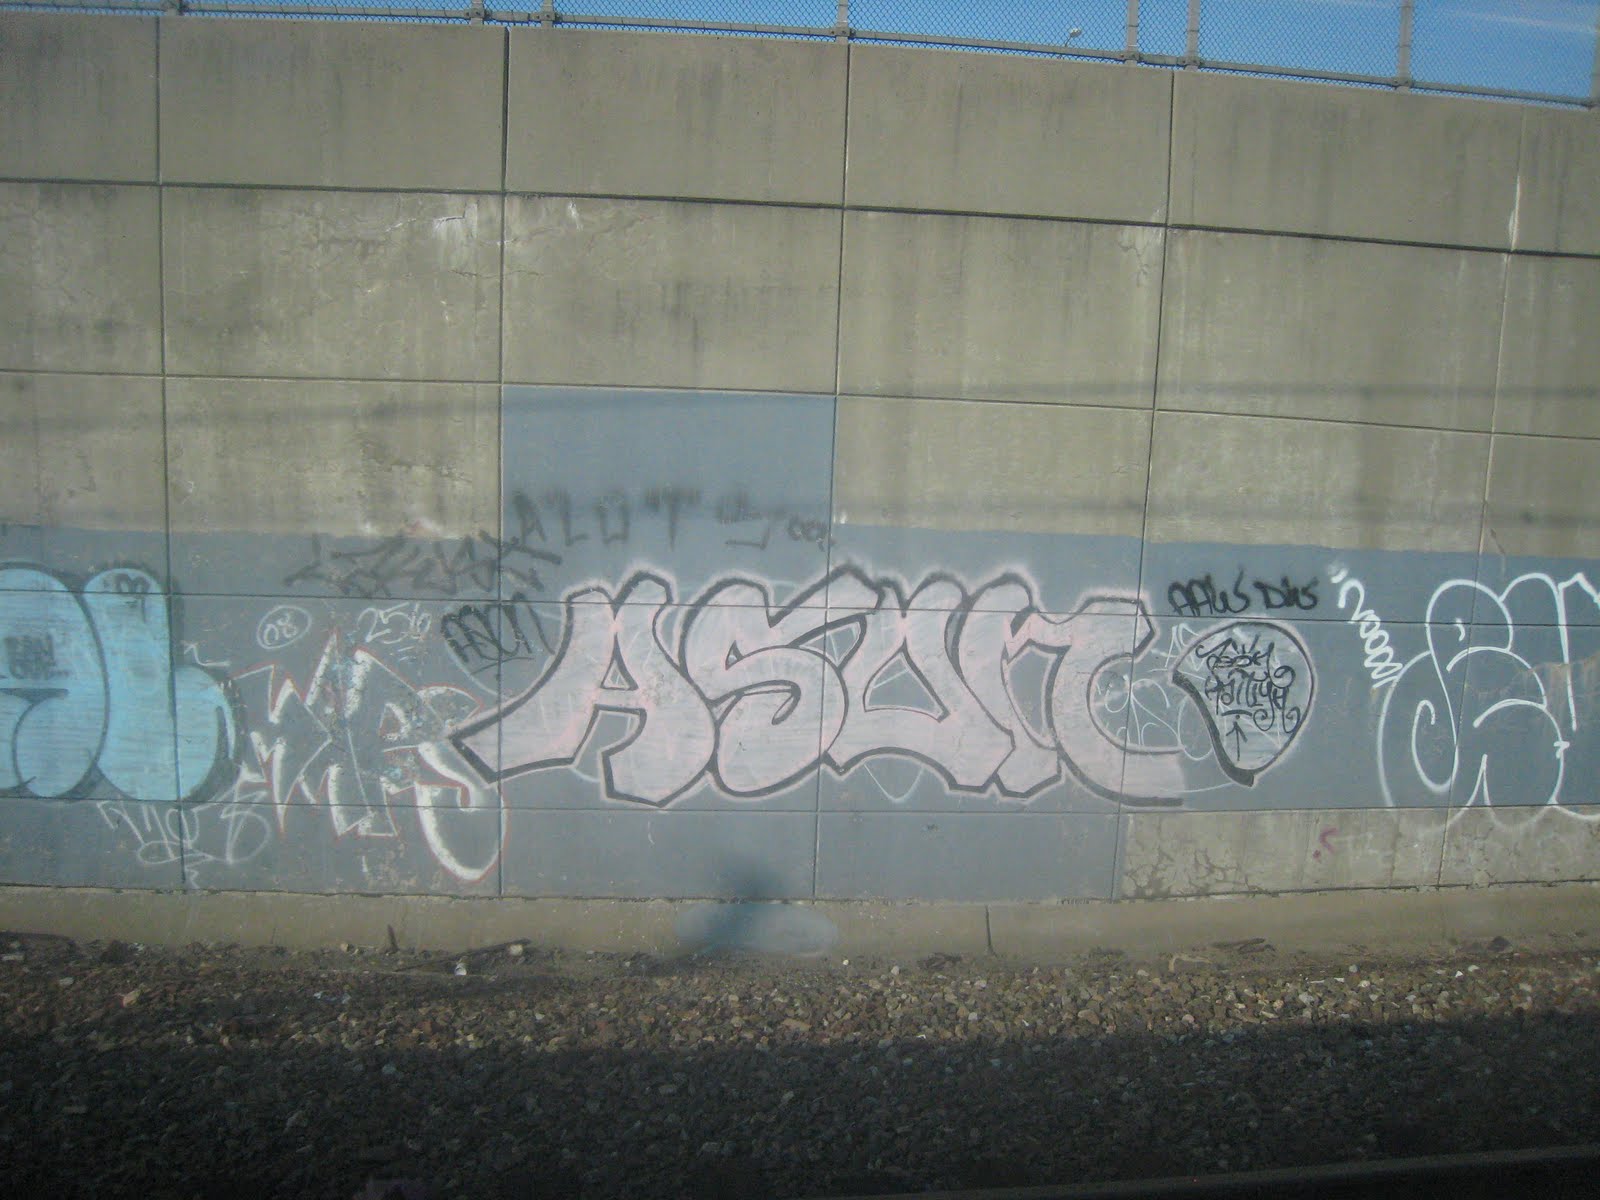 At149st New York City Graffiti 2011